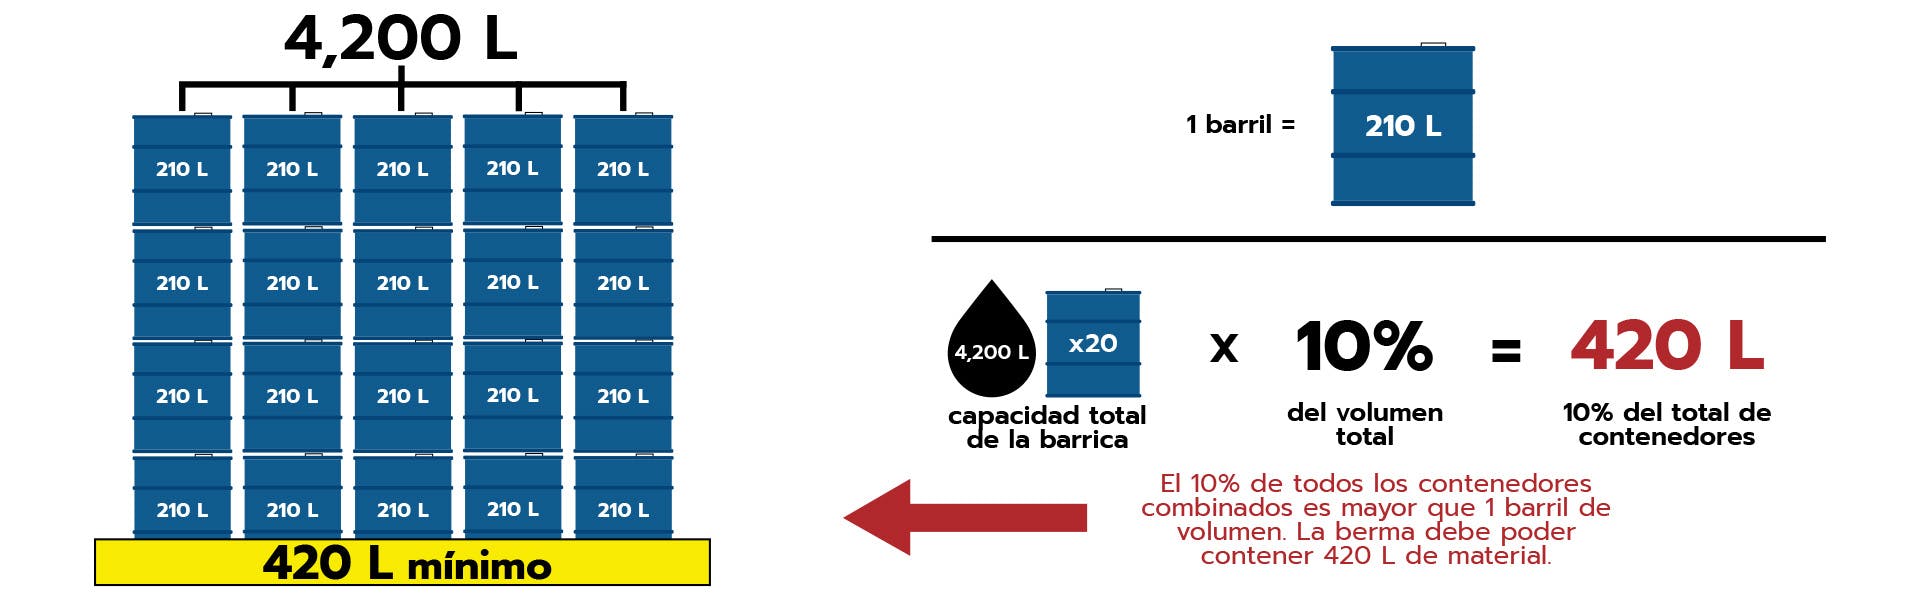 article image secondary berm capacity twenty barrels spanish language